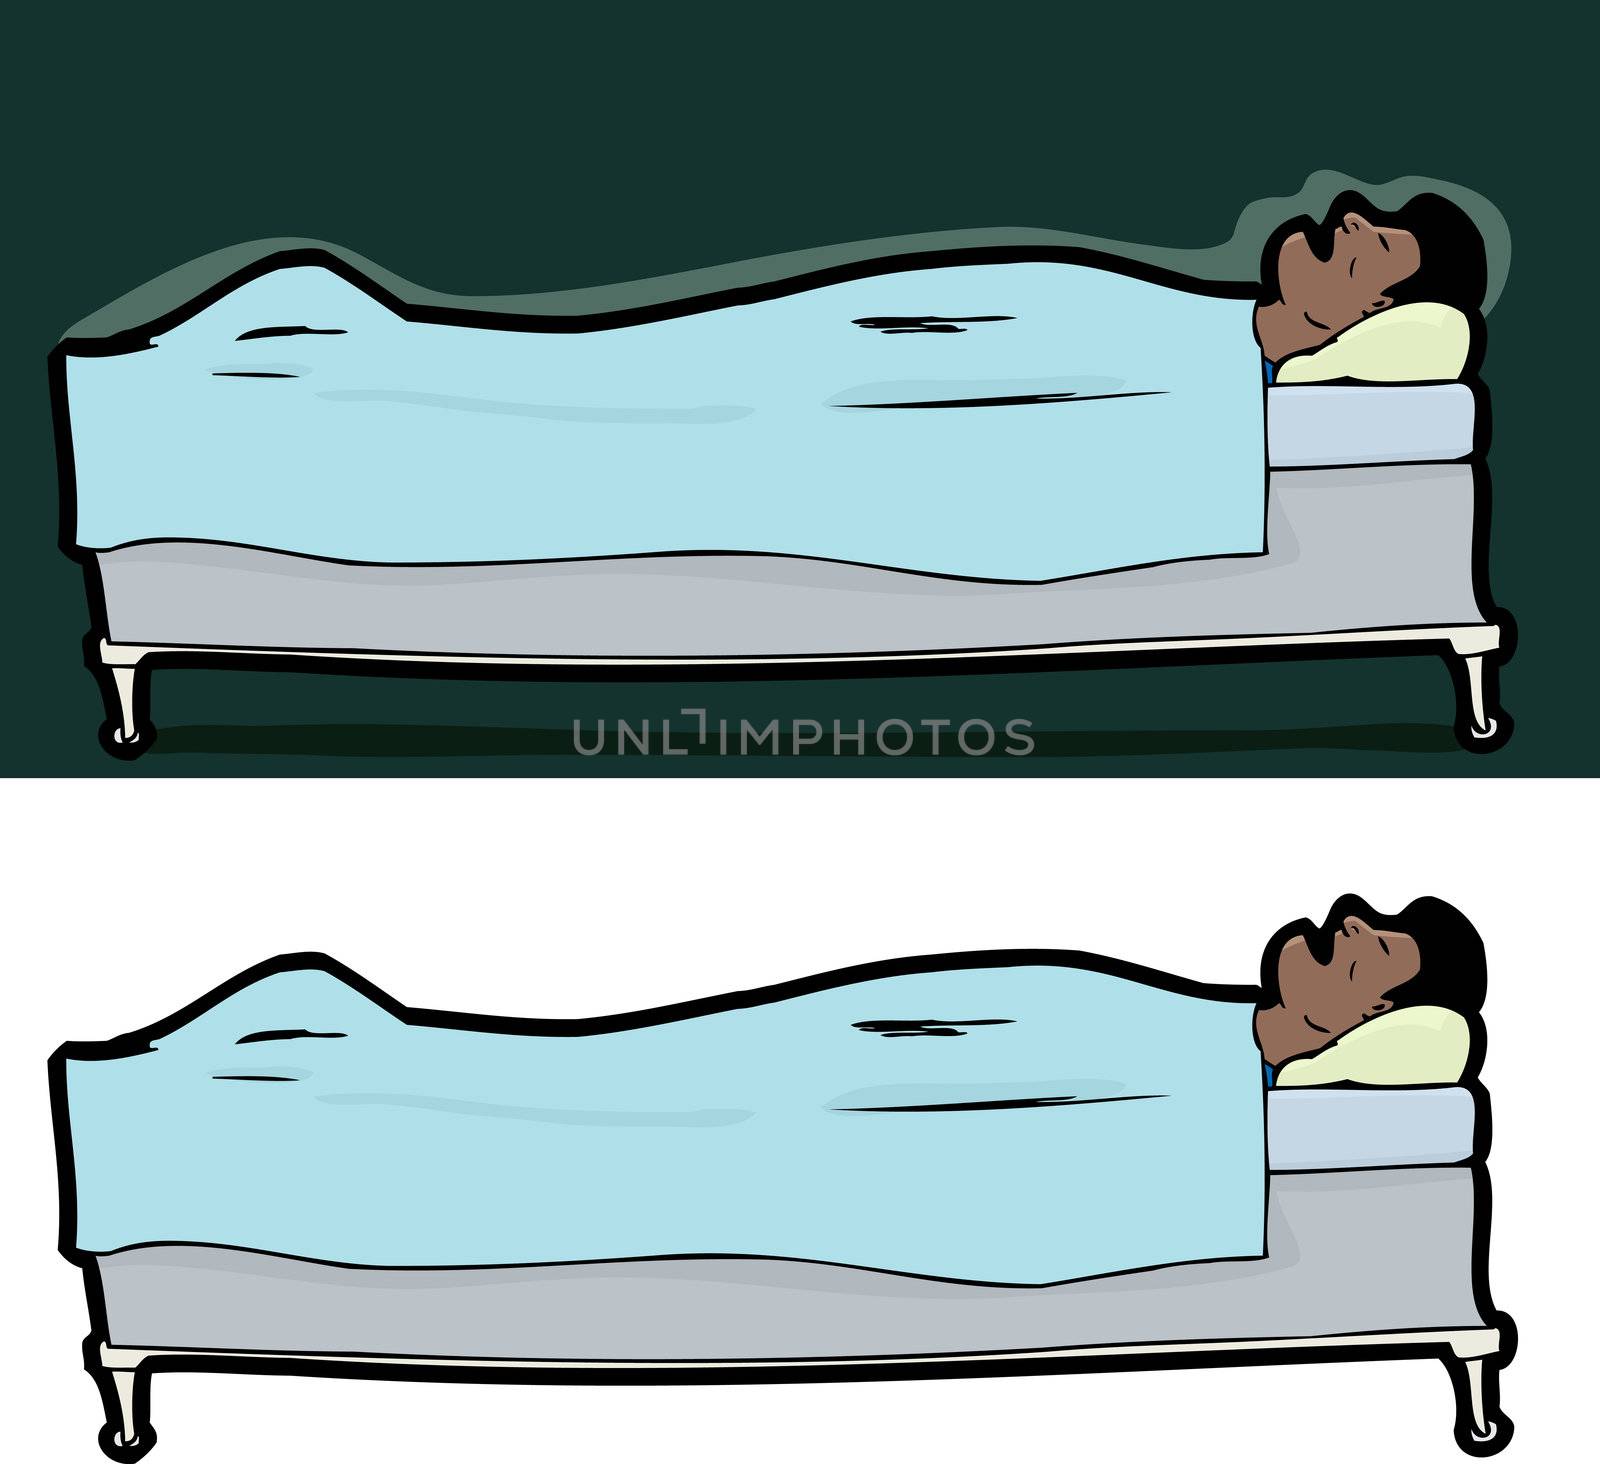 Sleeping Man in Bed by TheBlackRhino